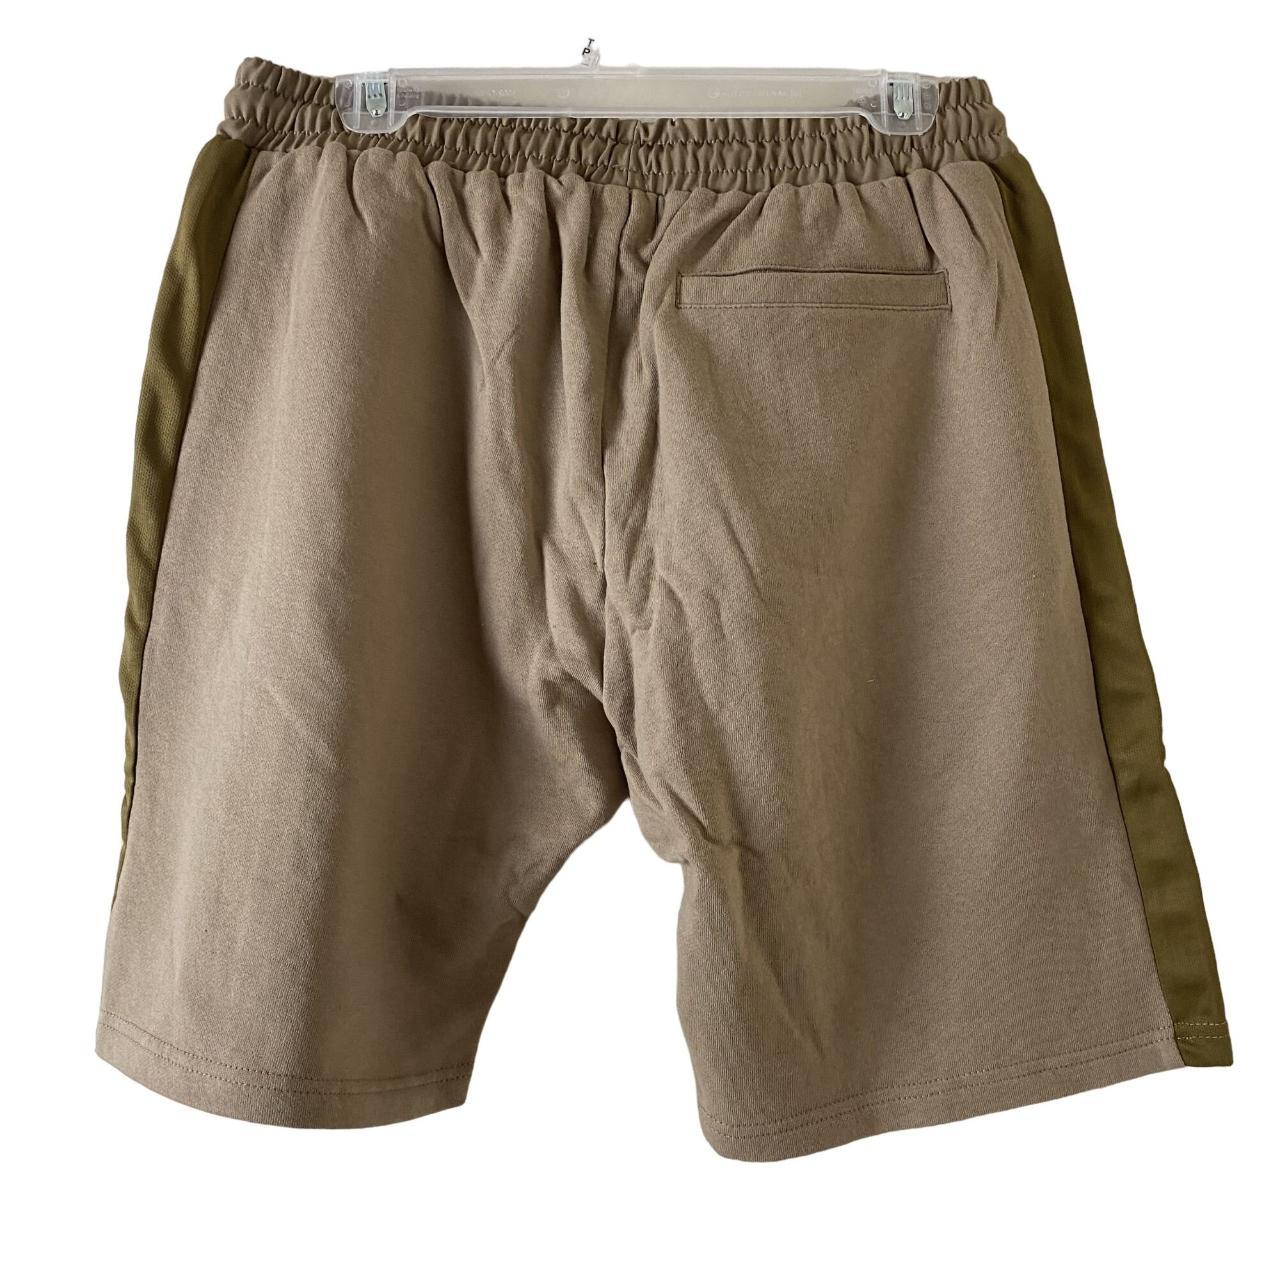 Kuwalla Tee Men's Khaki and Brown Shorts (2)